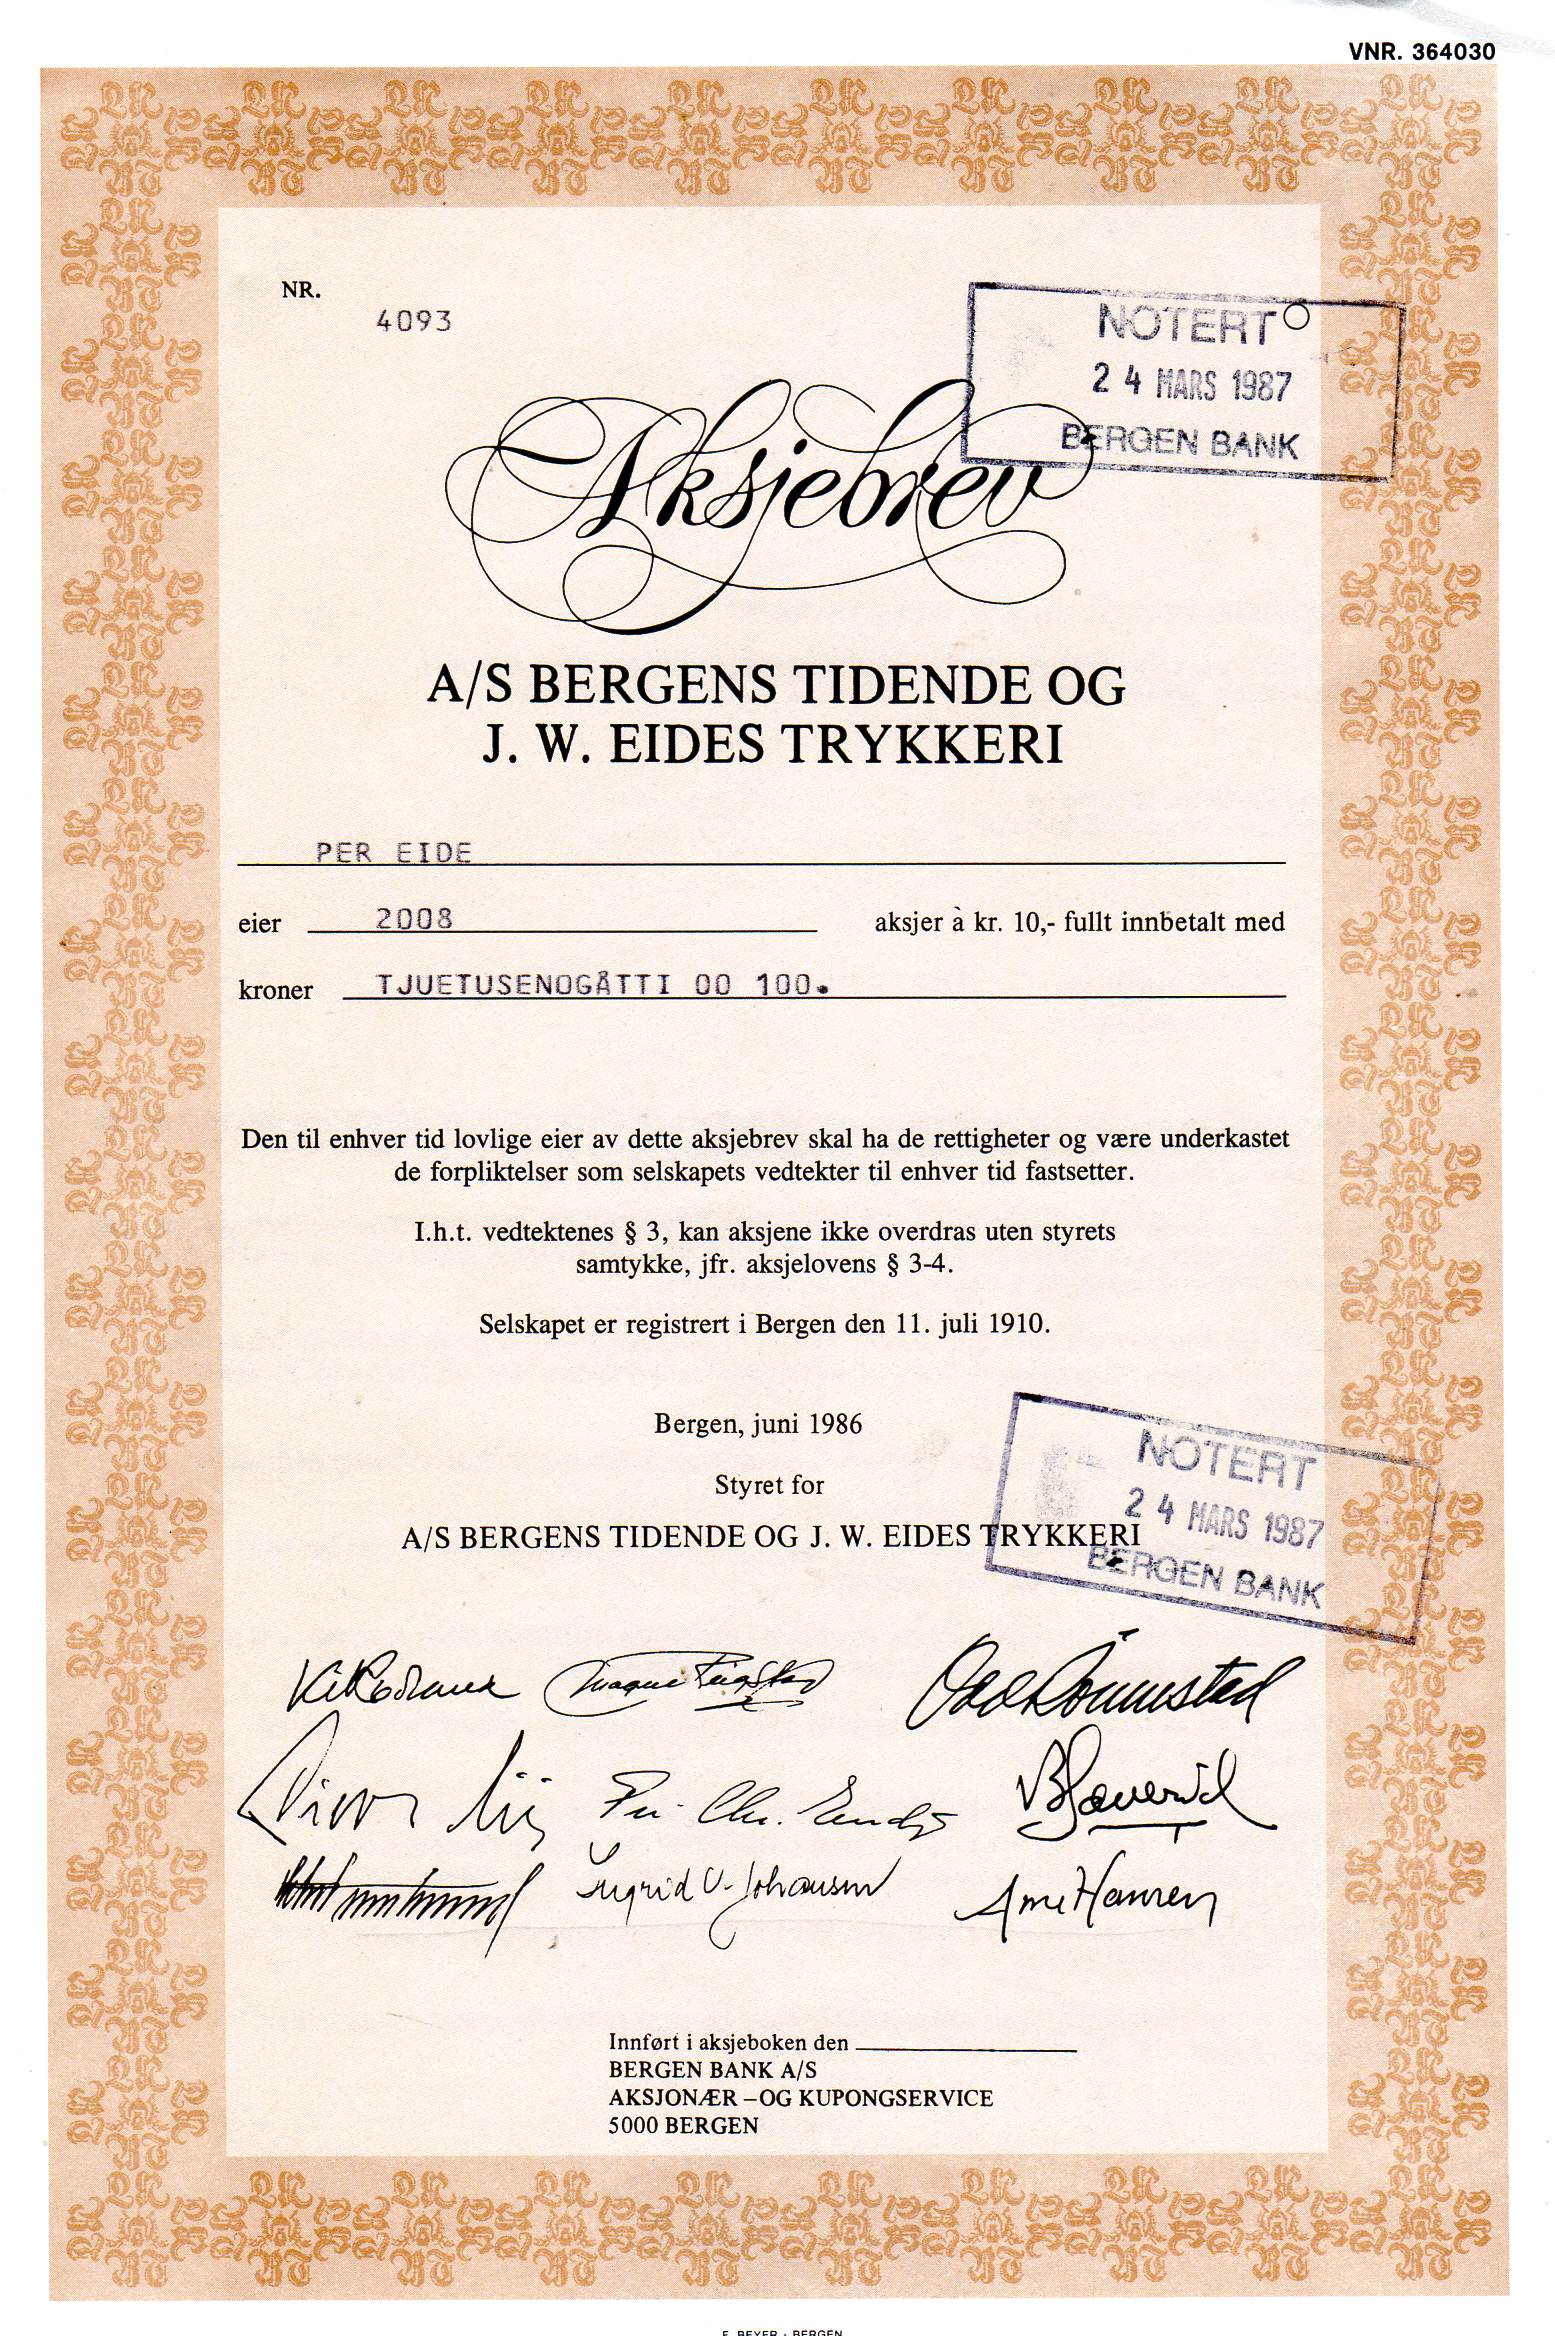 Bergens tidende/Eides trykkeri kr 100 Bergen 1985 nr 163/403/453/4093/4202/4008 pris pr stk